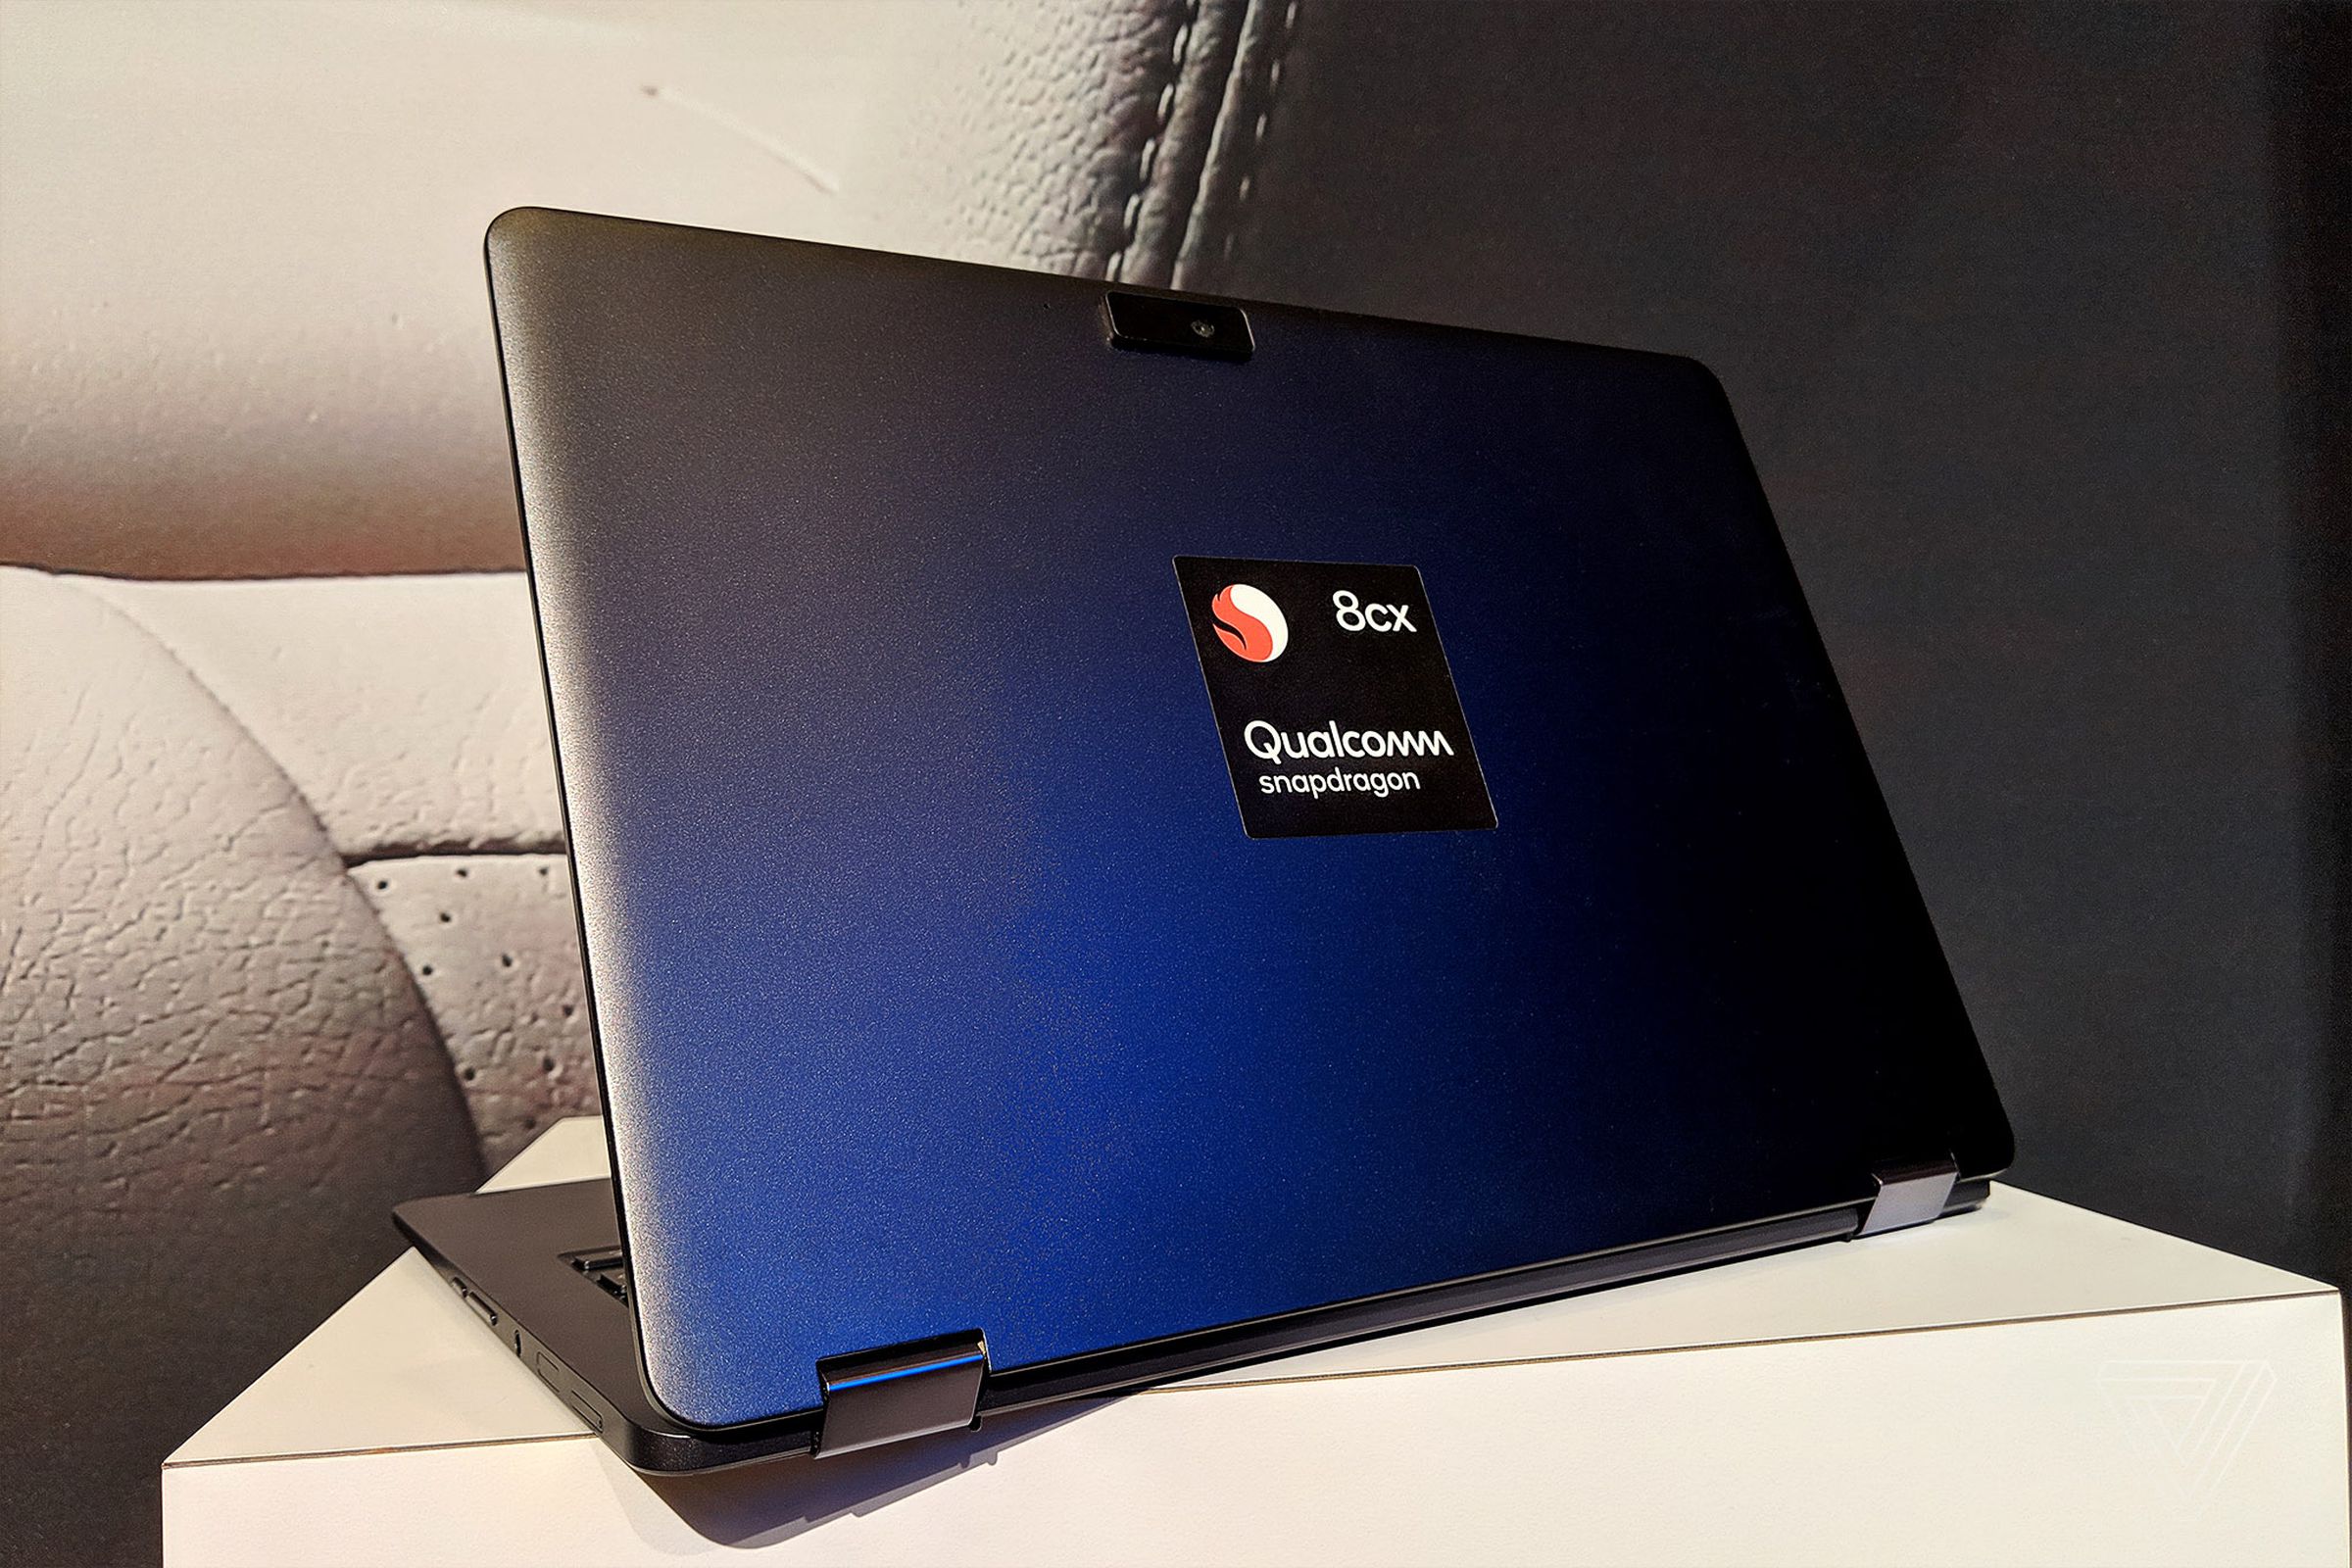 Qualcomm’s Snapdragon 8cx reference design laptop.